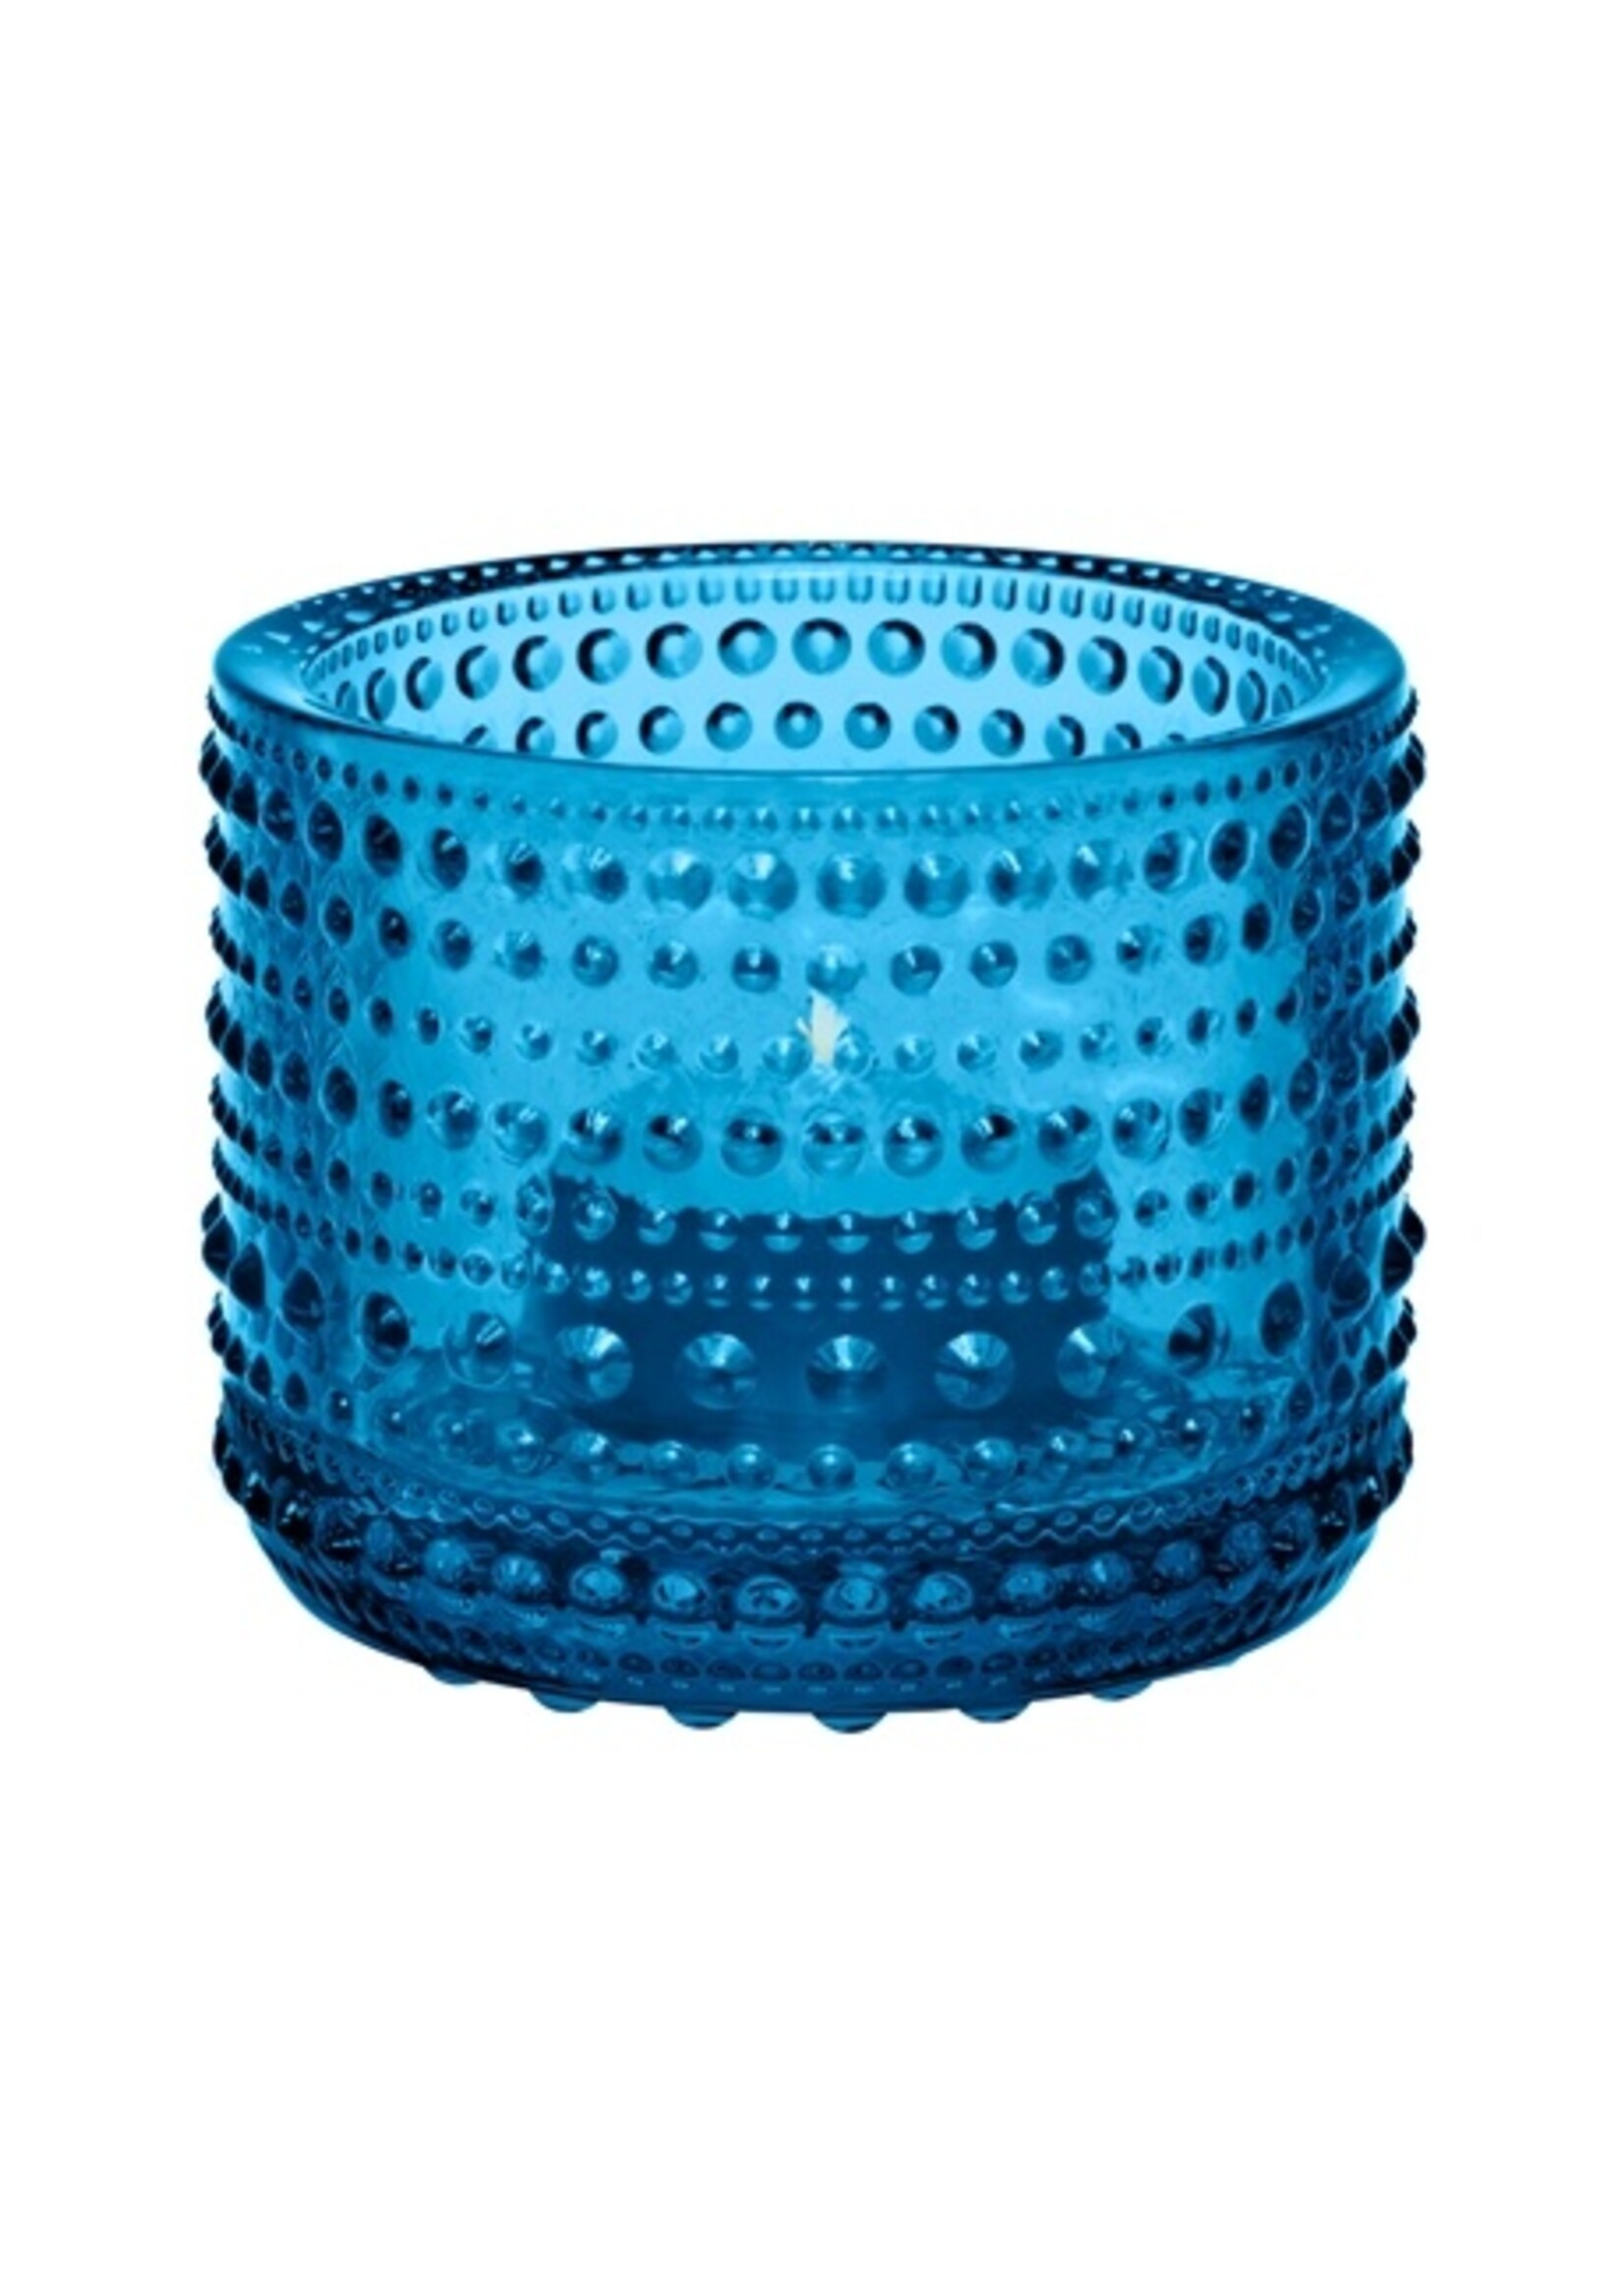 Iittala Iittala Kastehelmi Waxinelichthouder / Sfeerlicht 64 mm Turquoise